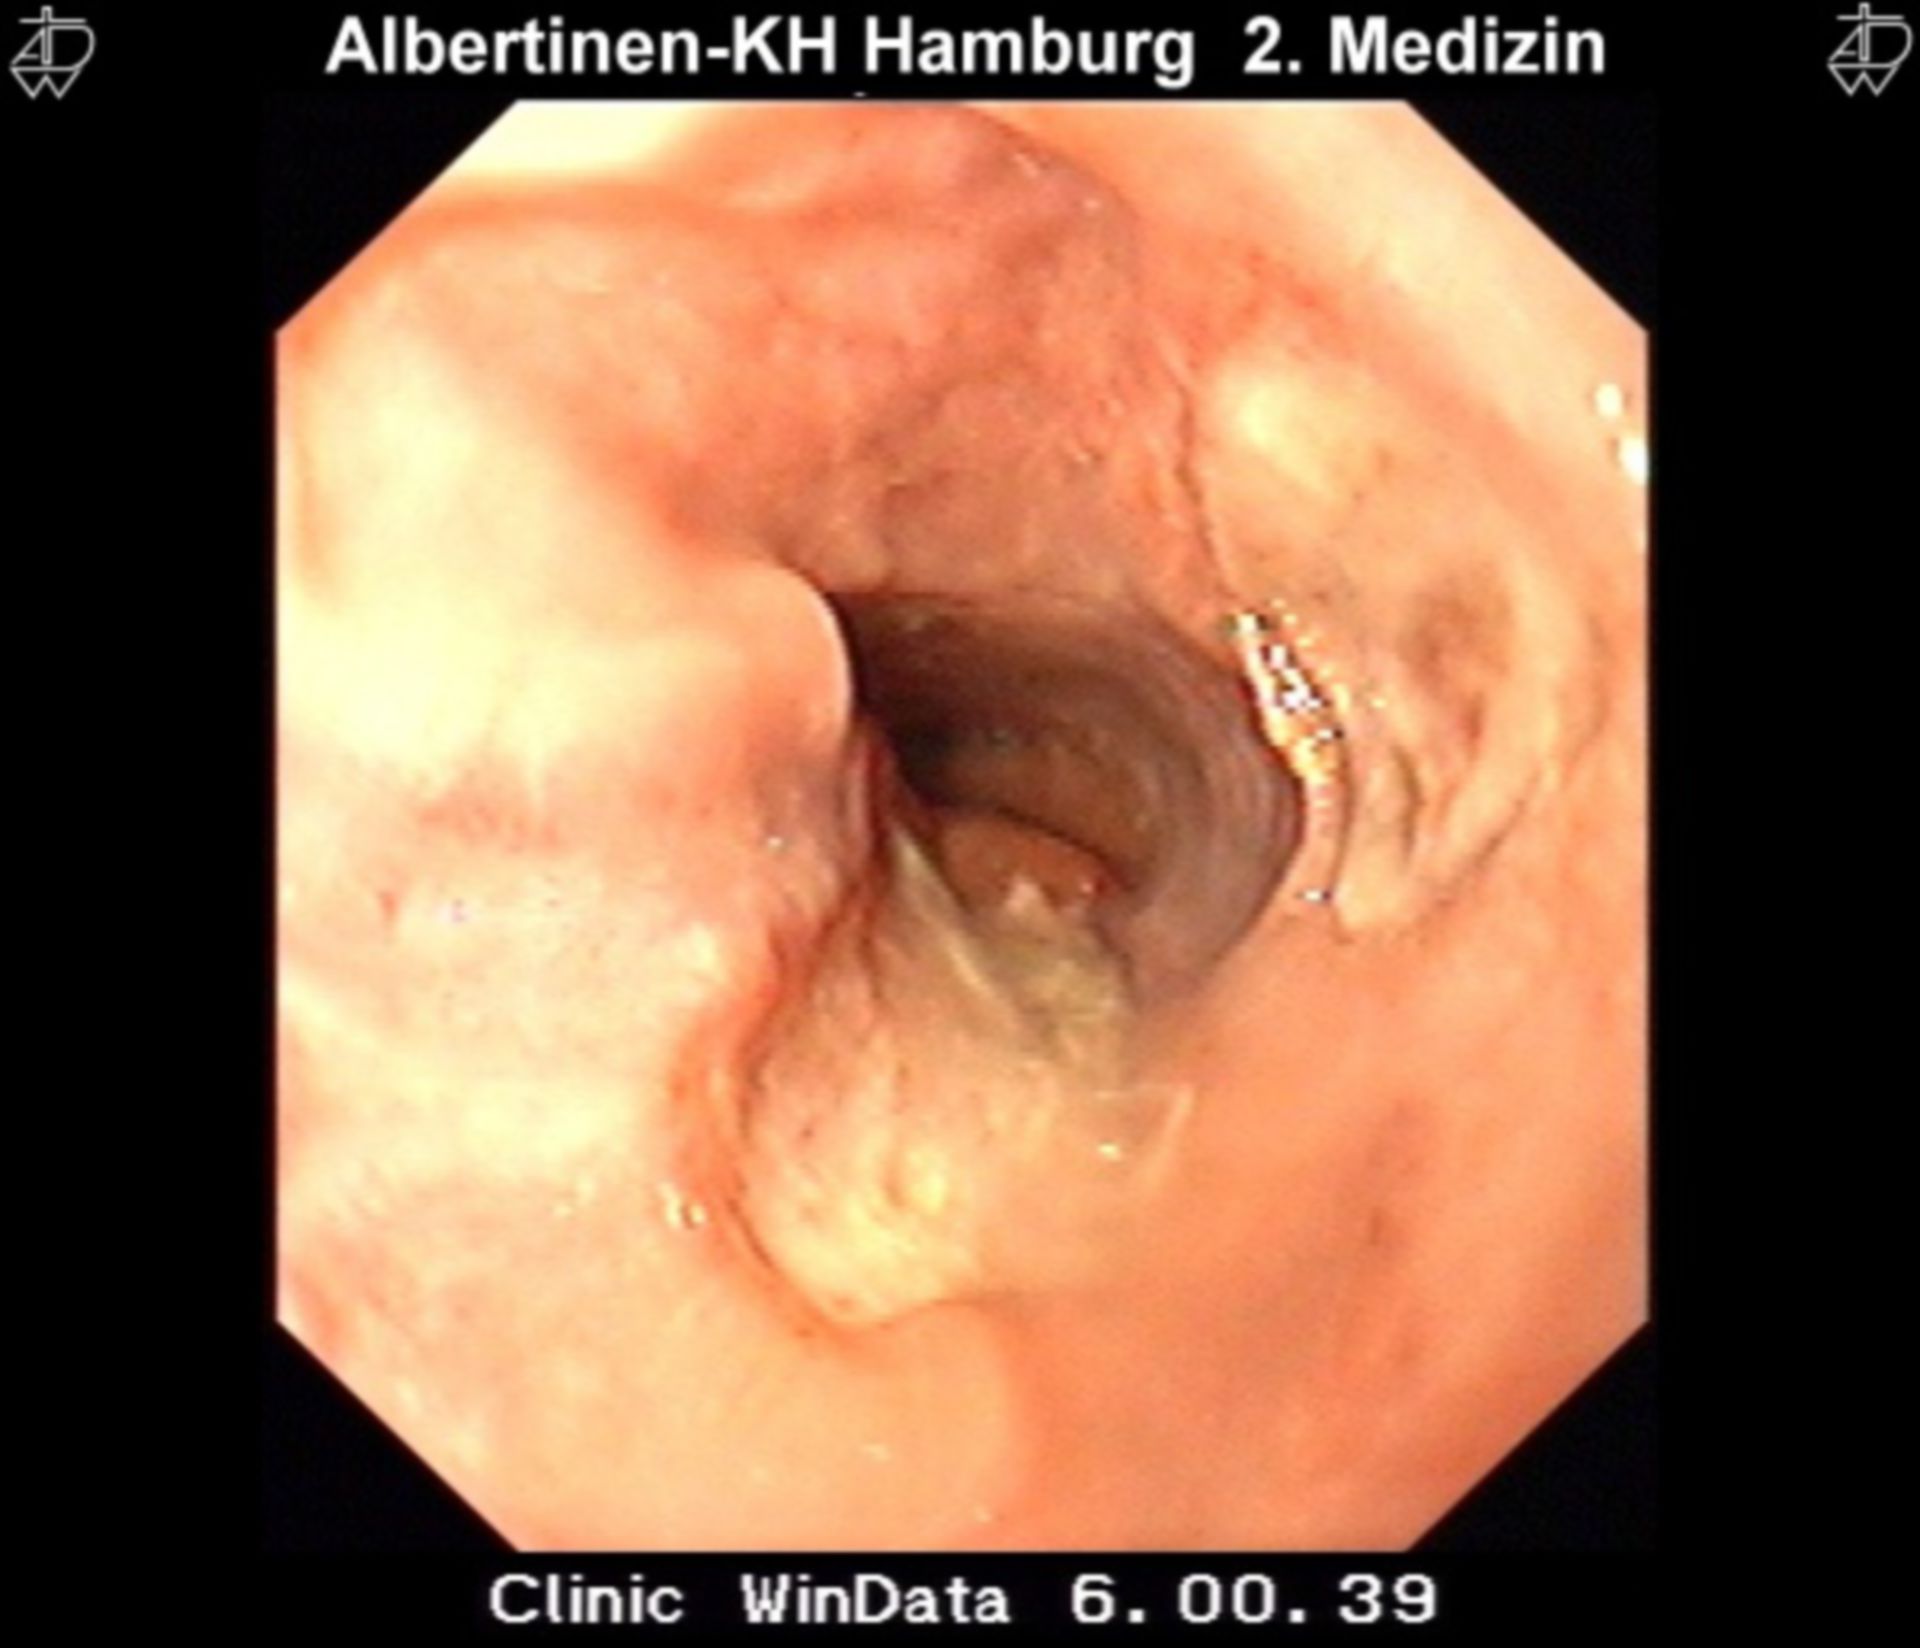 Ligation of an ulcer